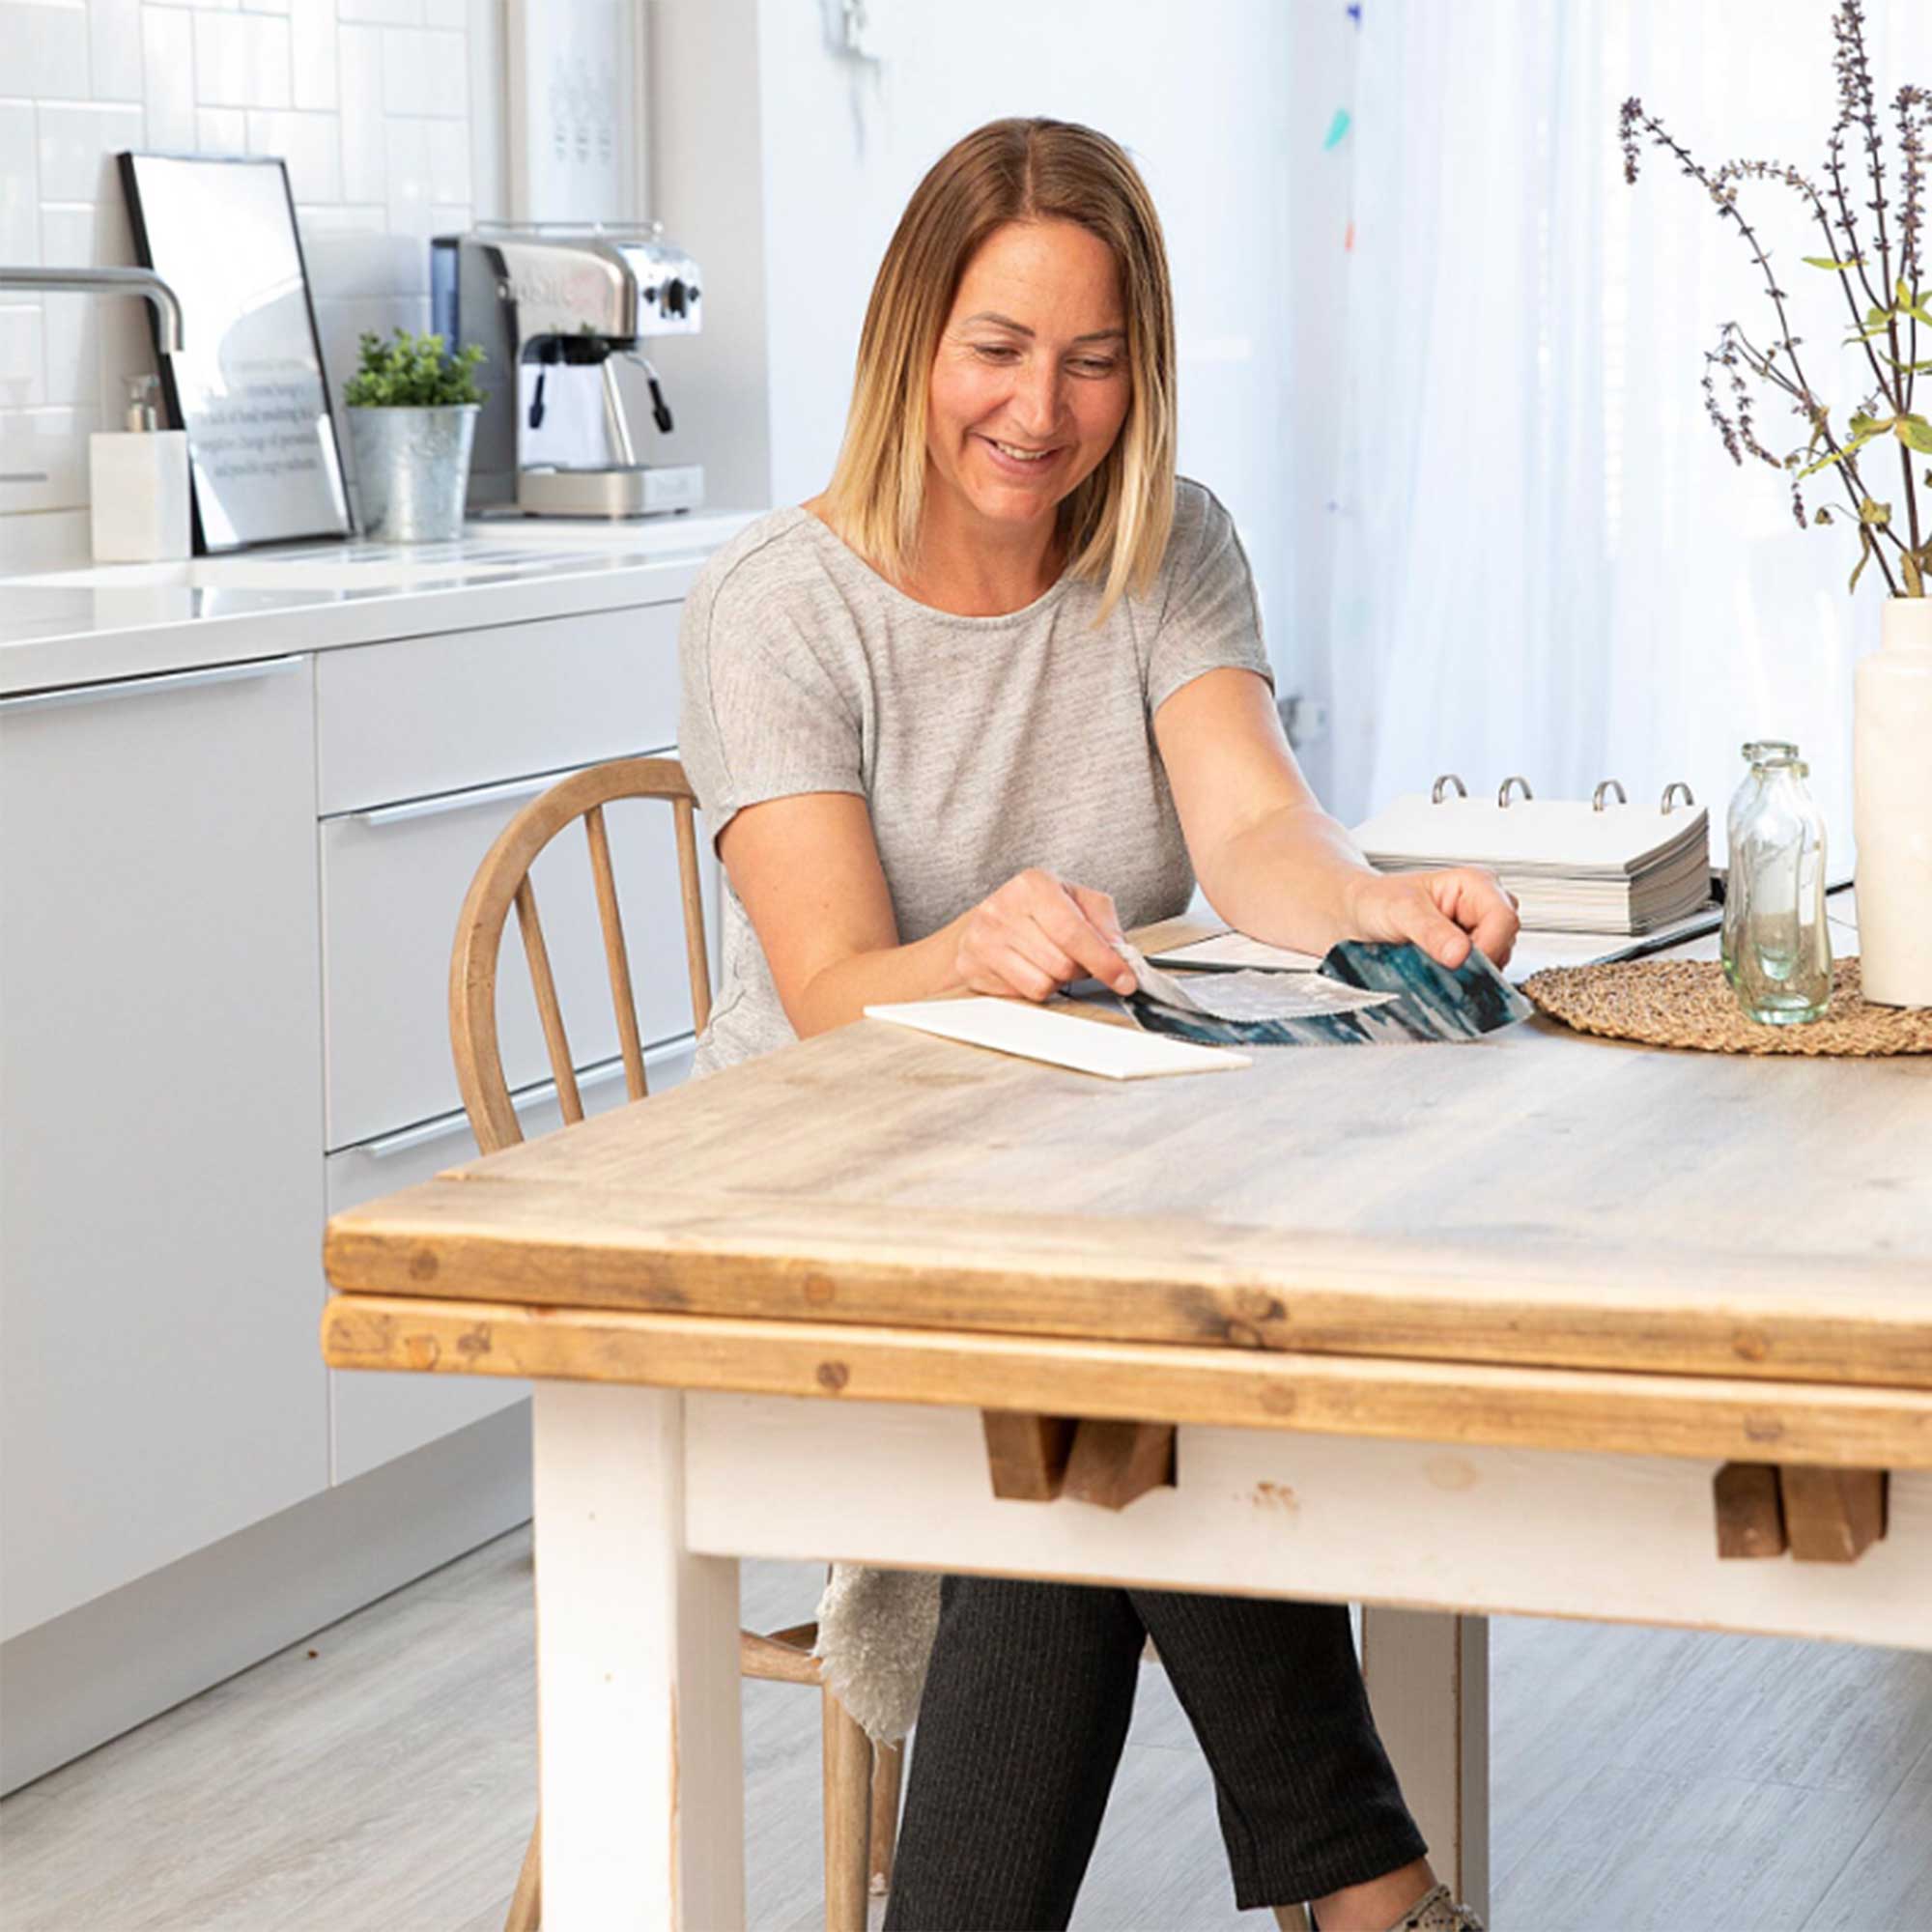 Lindsay Goth an interior designer sat at her kitchen table 